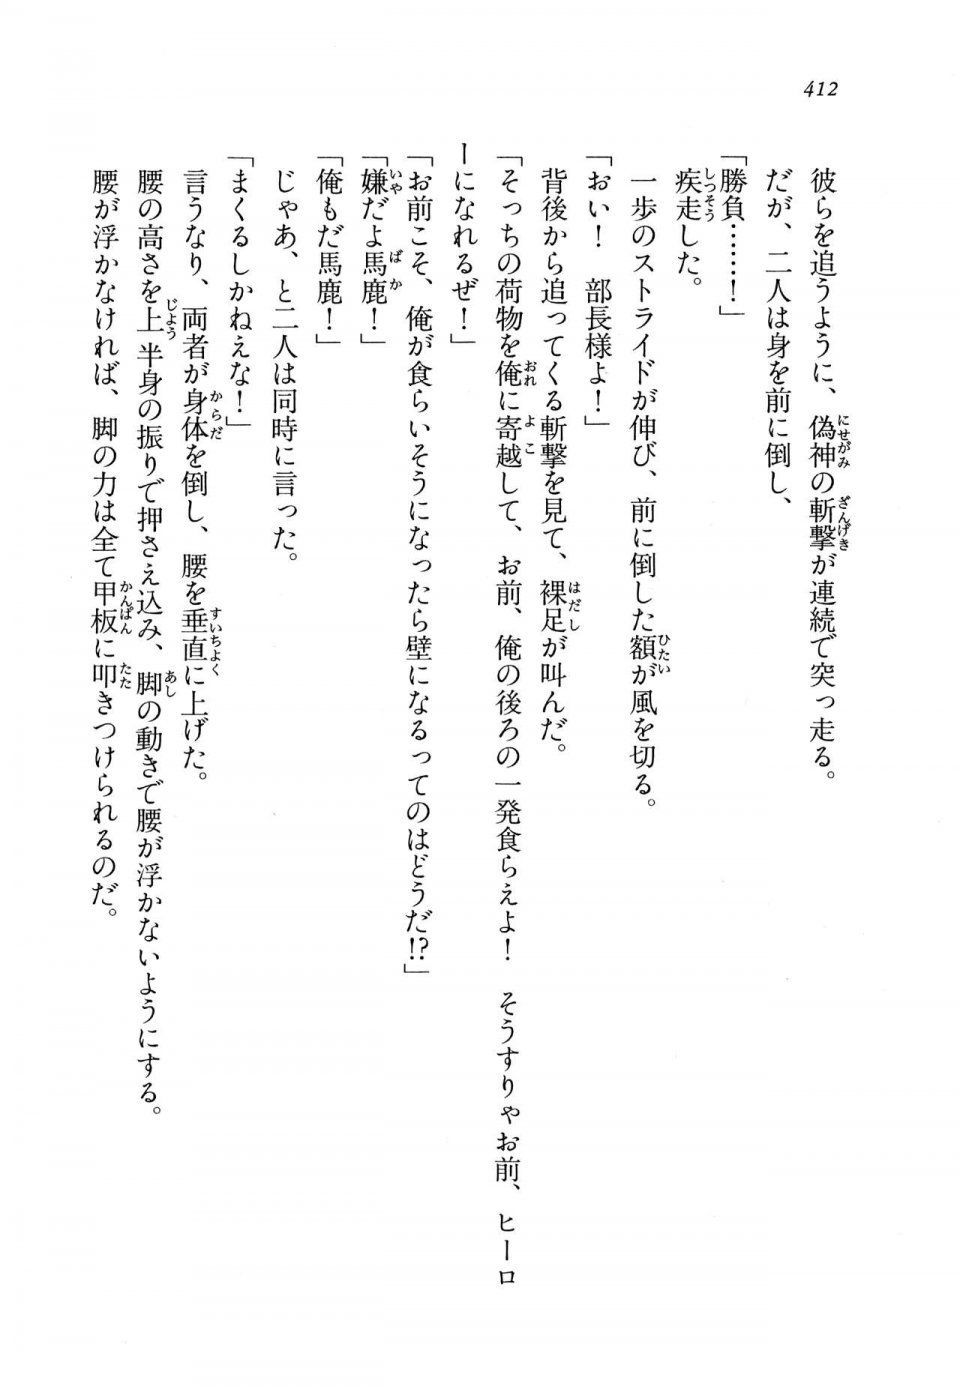 Kyoukai Senjou no Horizon BD Special Mininovel Vol 8(4B) - Photo #416